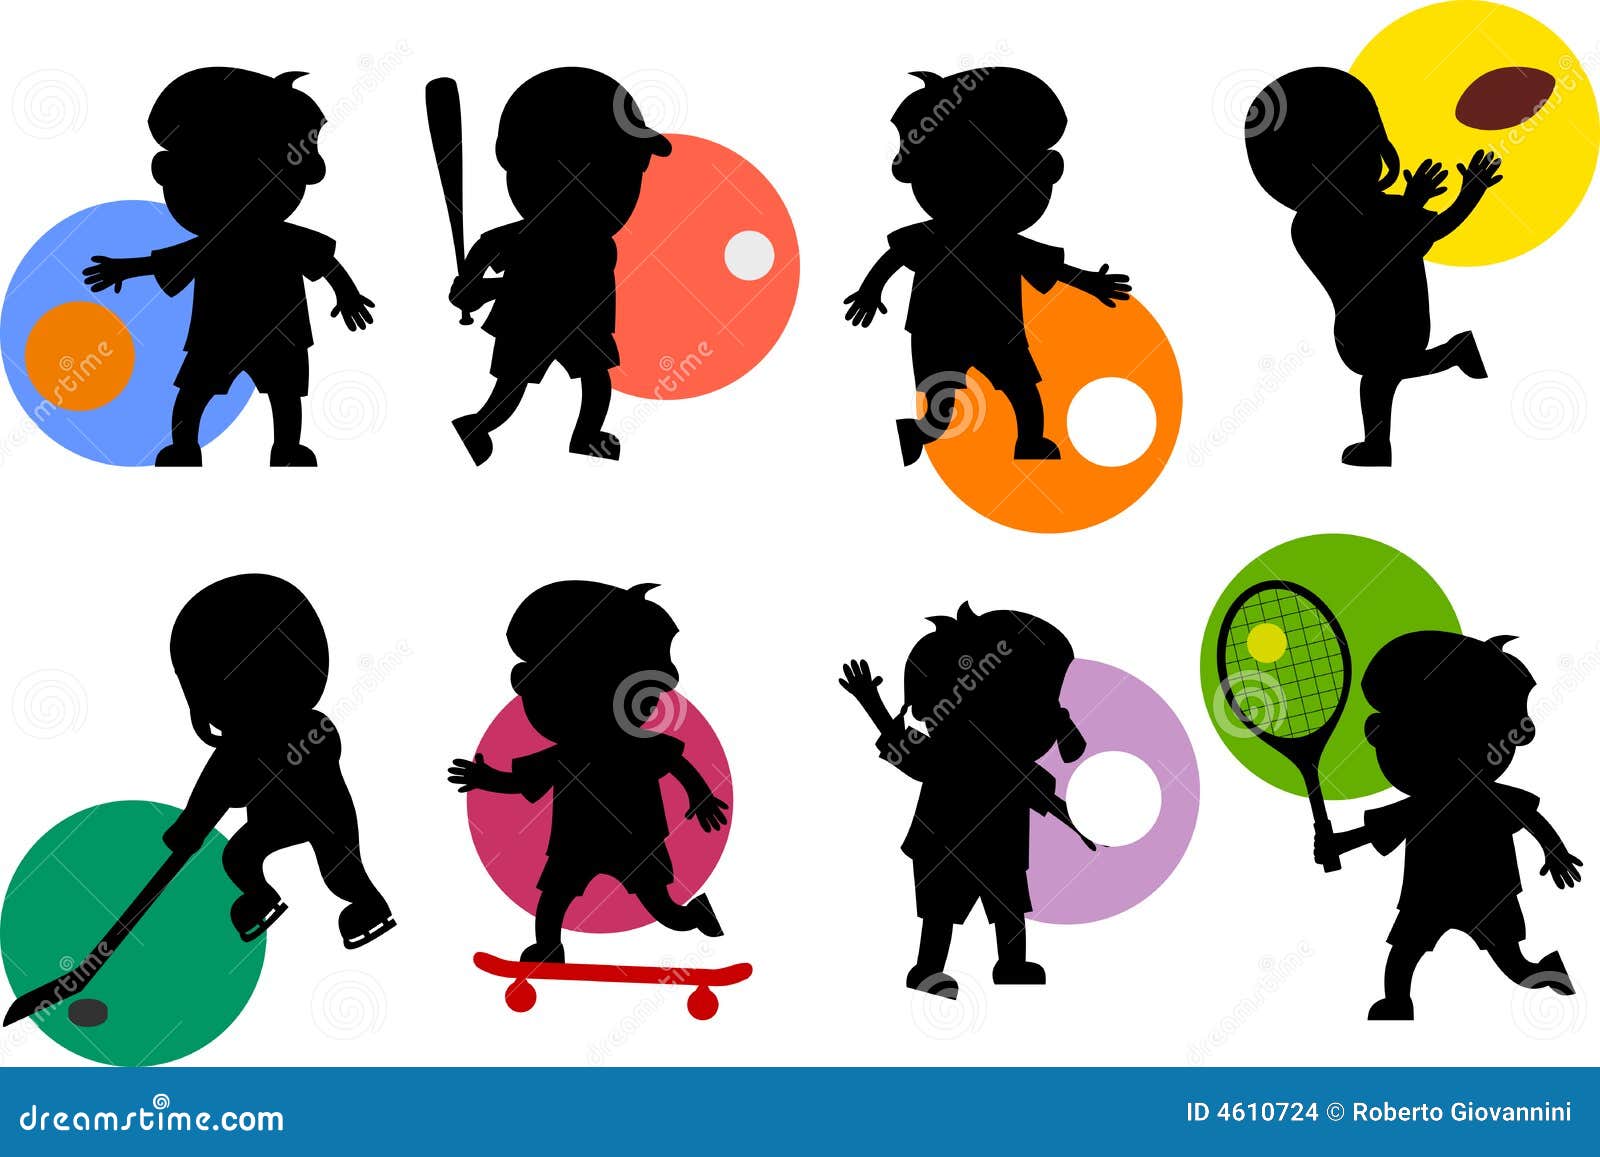 sport kids silhouettes [1]